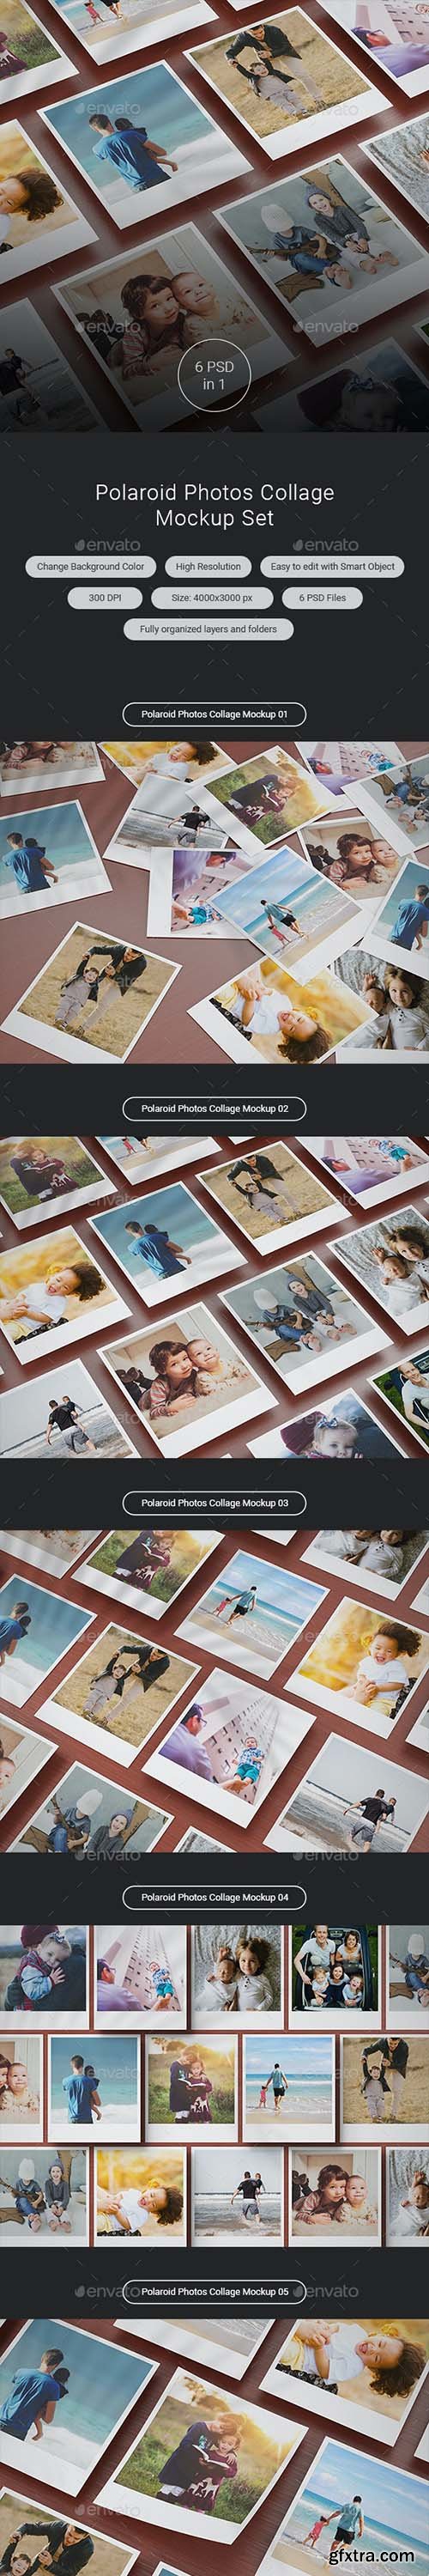 Graphicriver - Polaroid Photos Collage Mockup Set 39390996